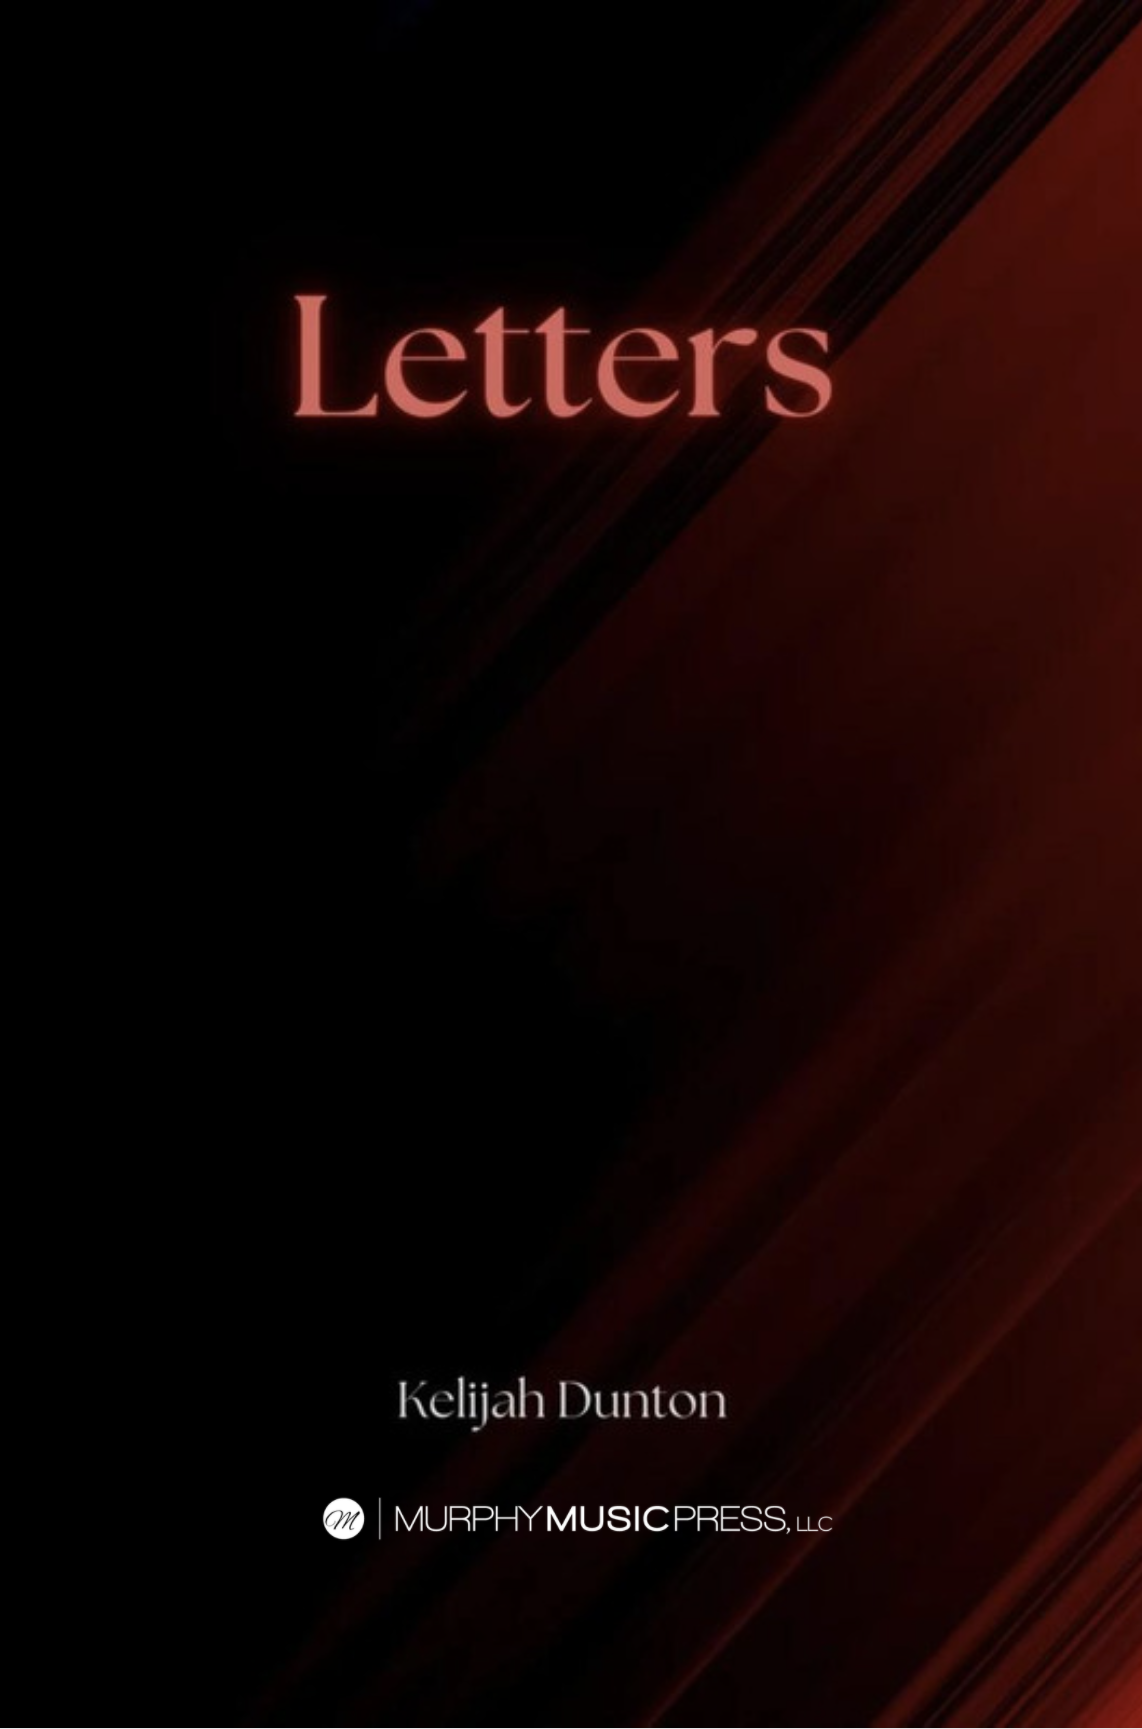 Letters by Kelijah Dunton